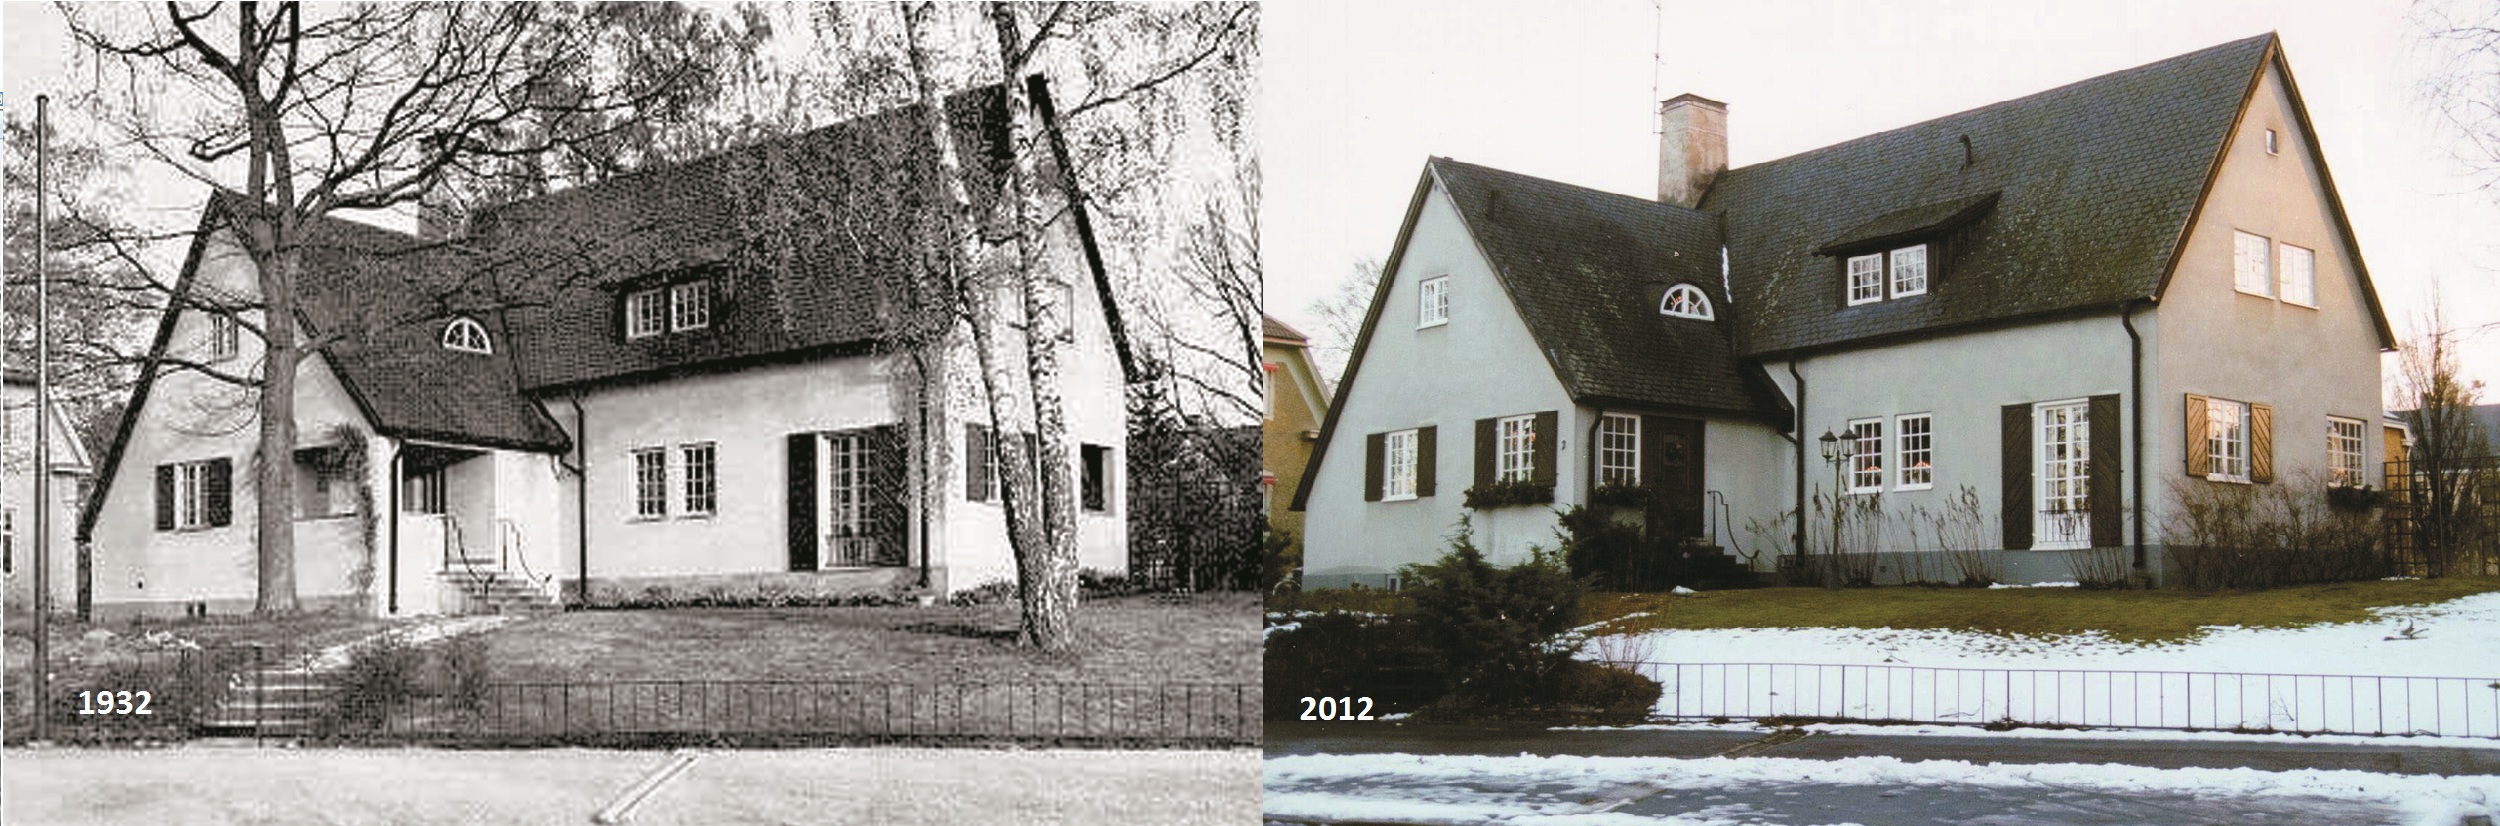 skandinavian_houses_1930-2010_1.jpg